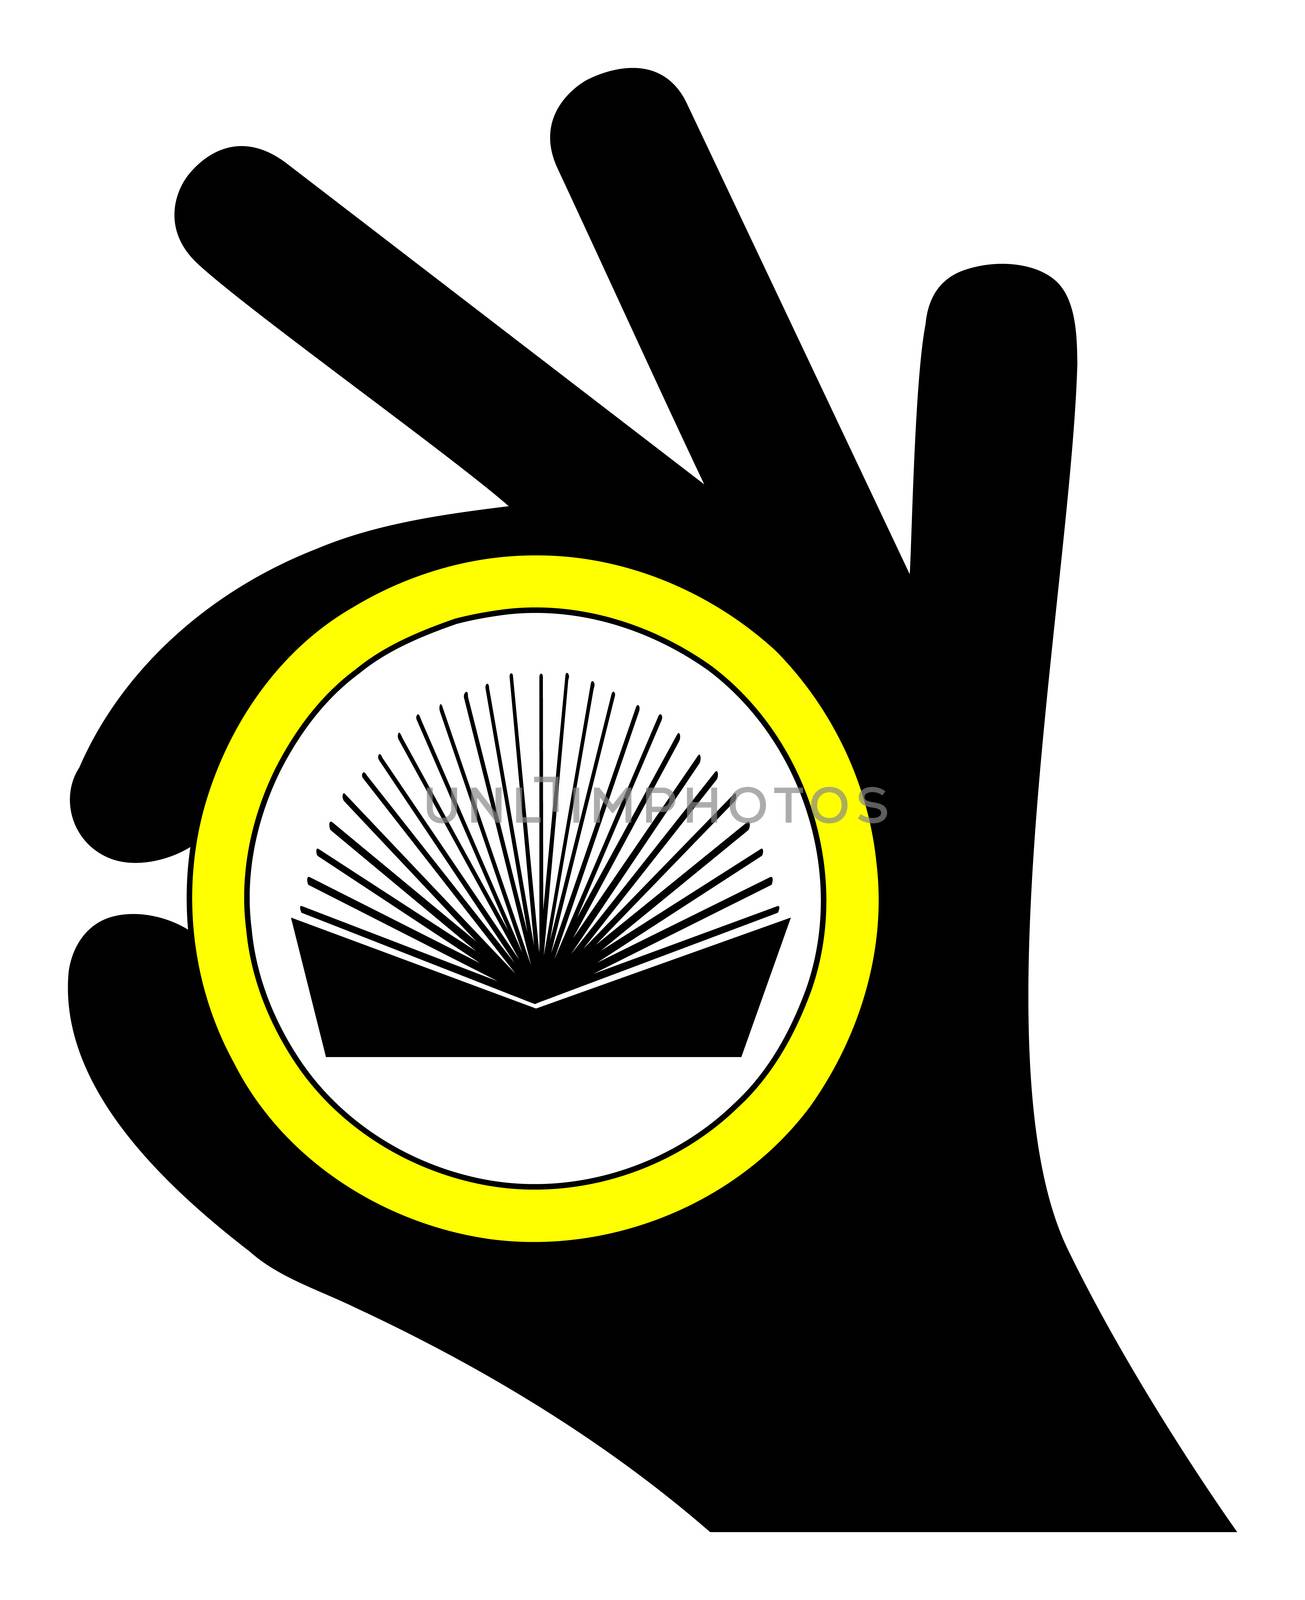 Bestseller Symbol for Books by Bambara